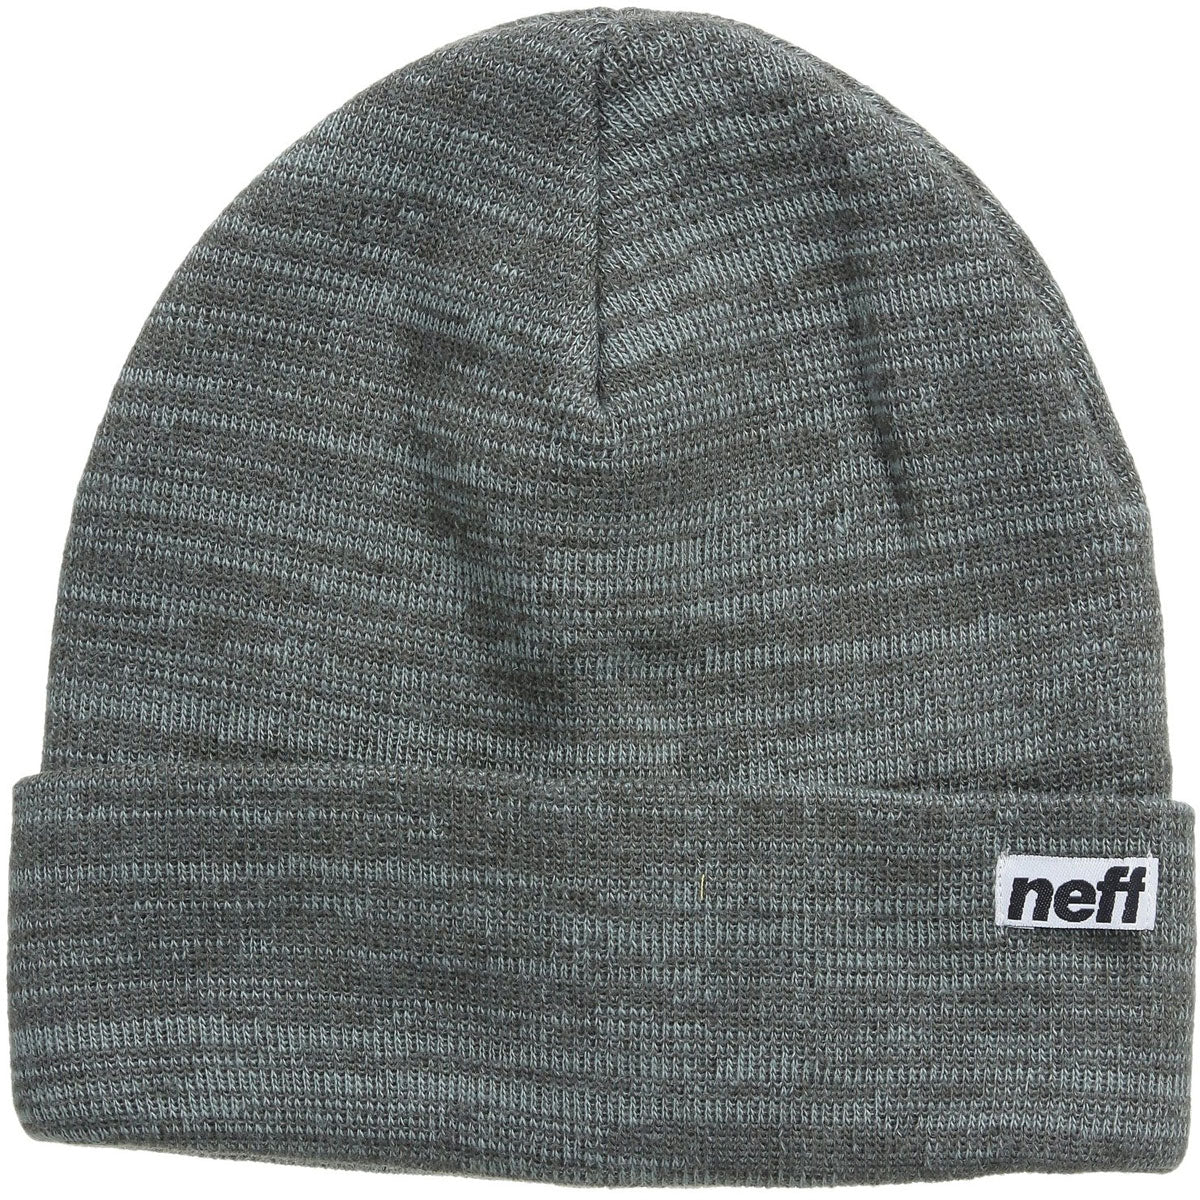 Neff Heath Men's Beanie Hats - Black/White